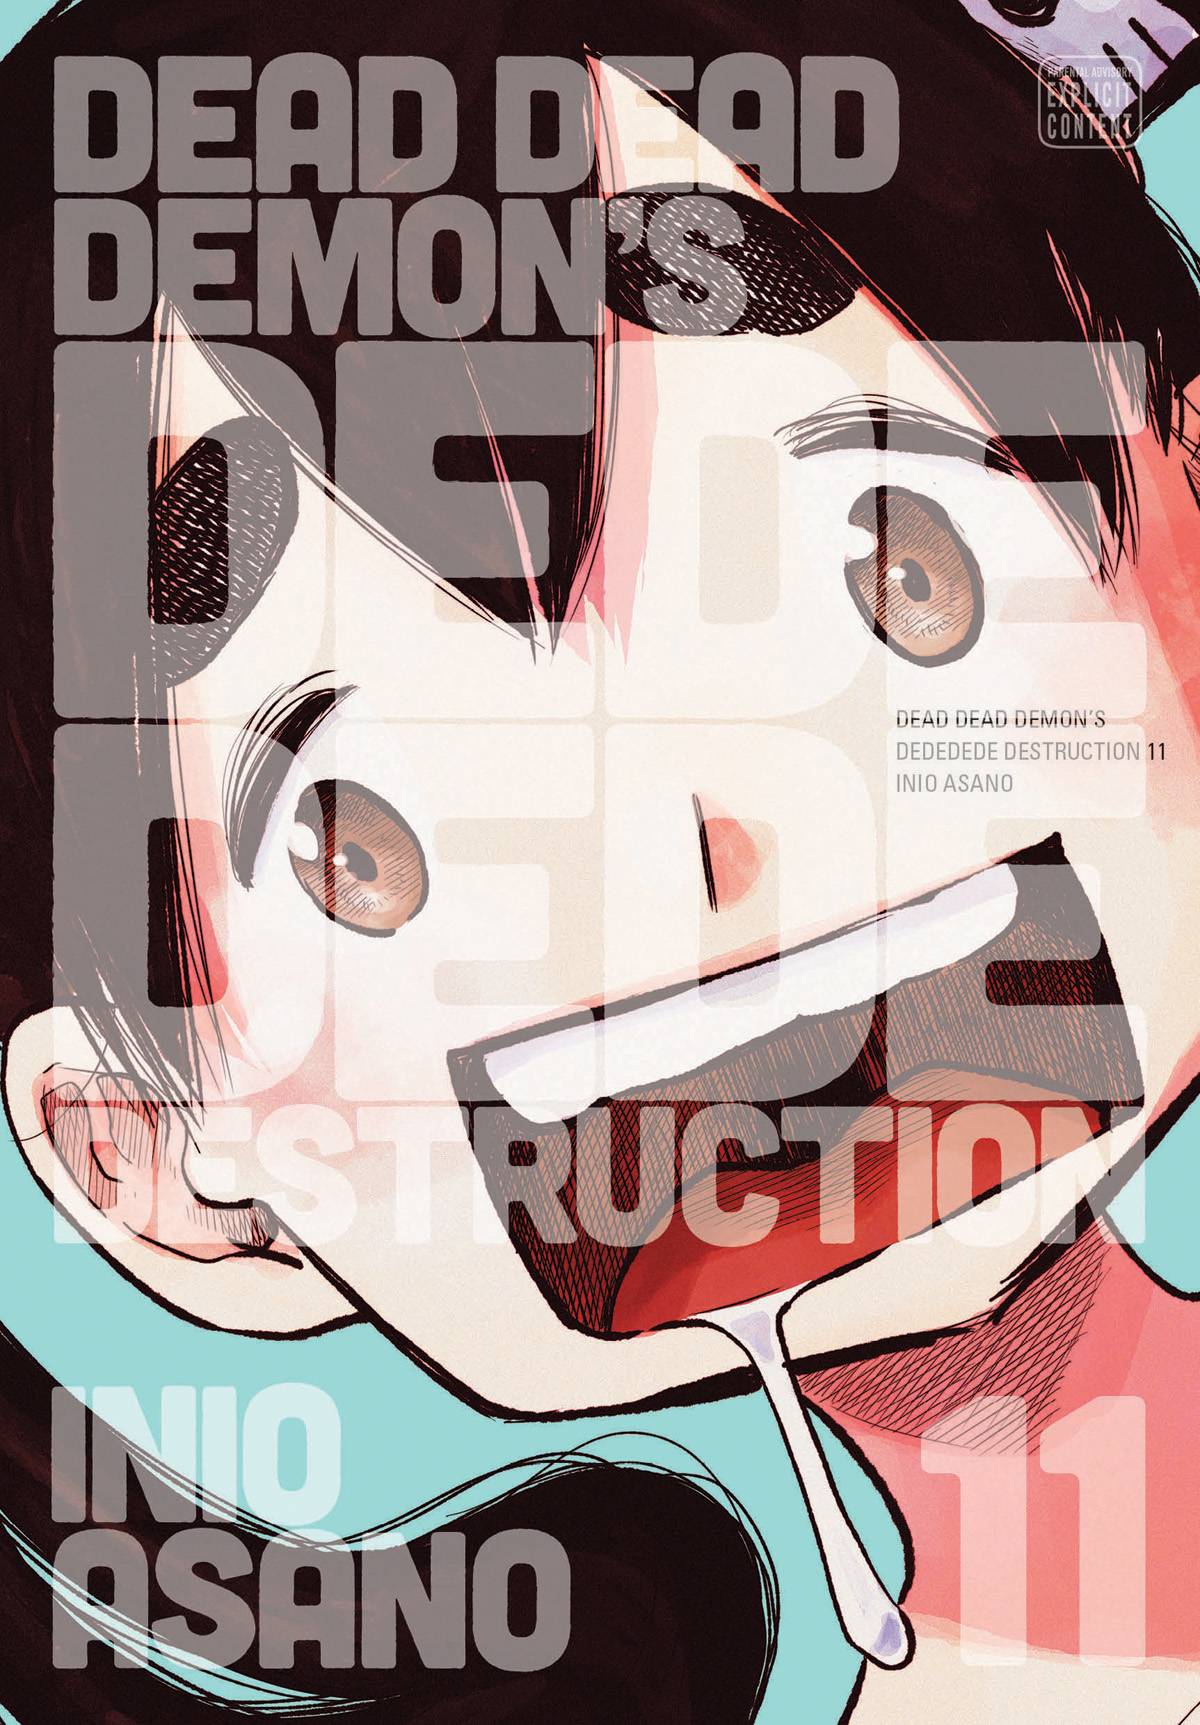 Dead Dead Demon's Dededede Destruction vol 11